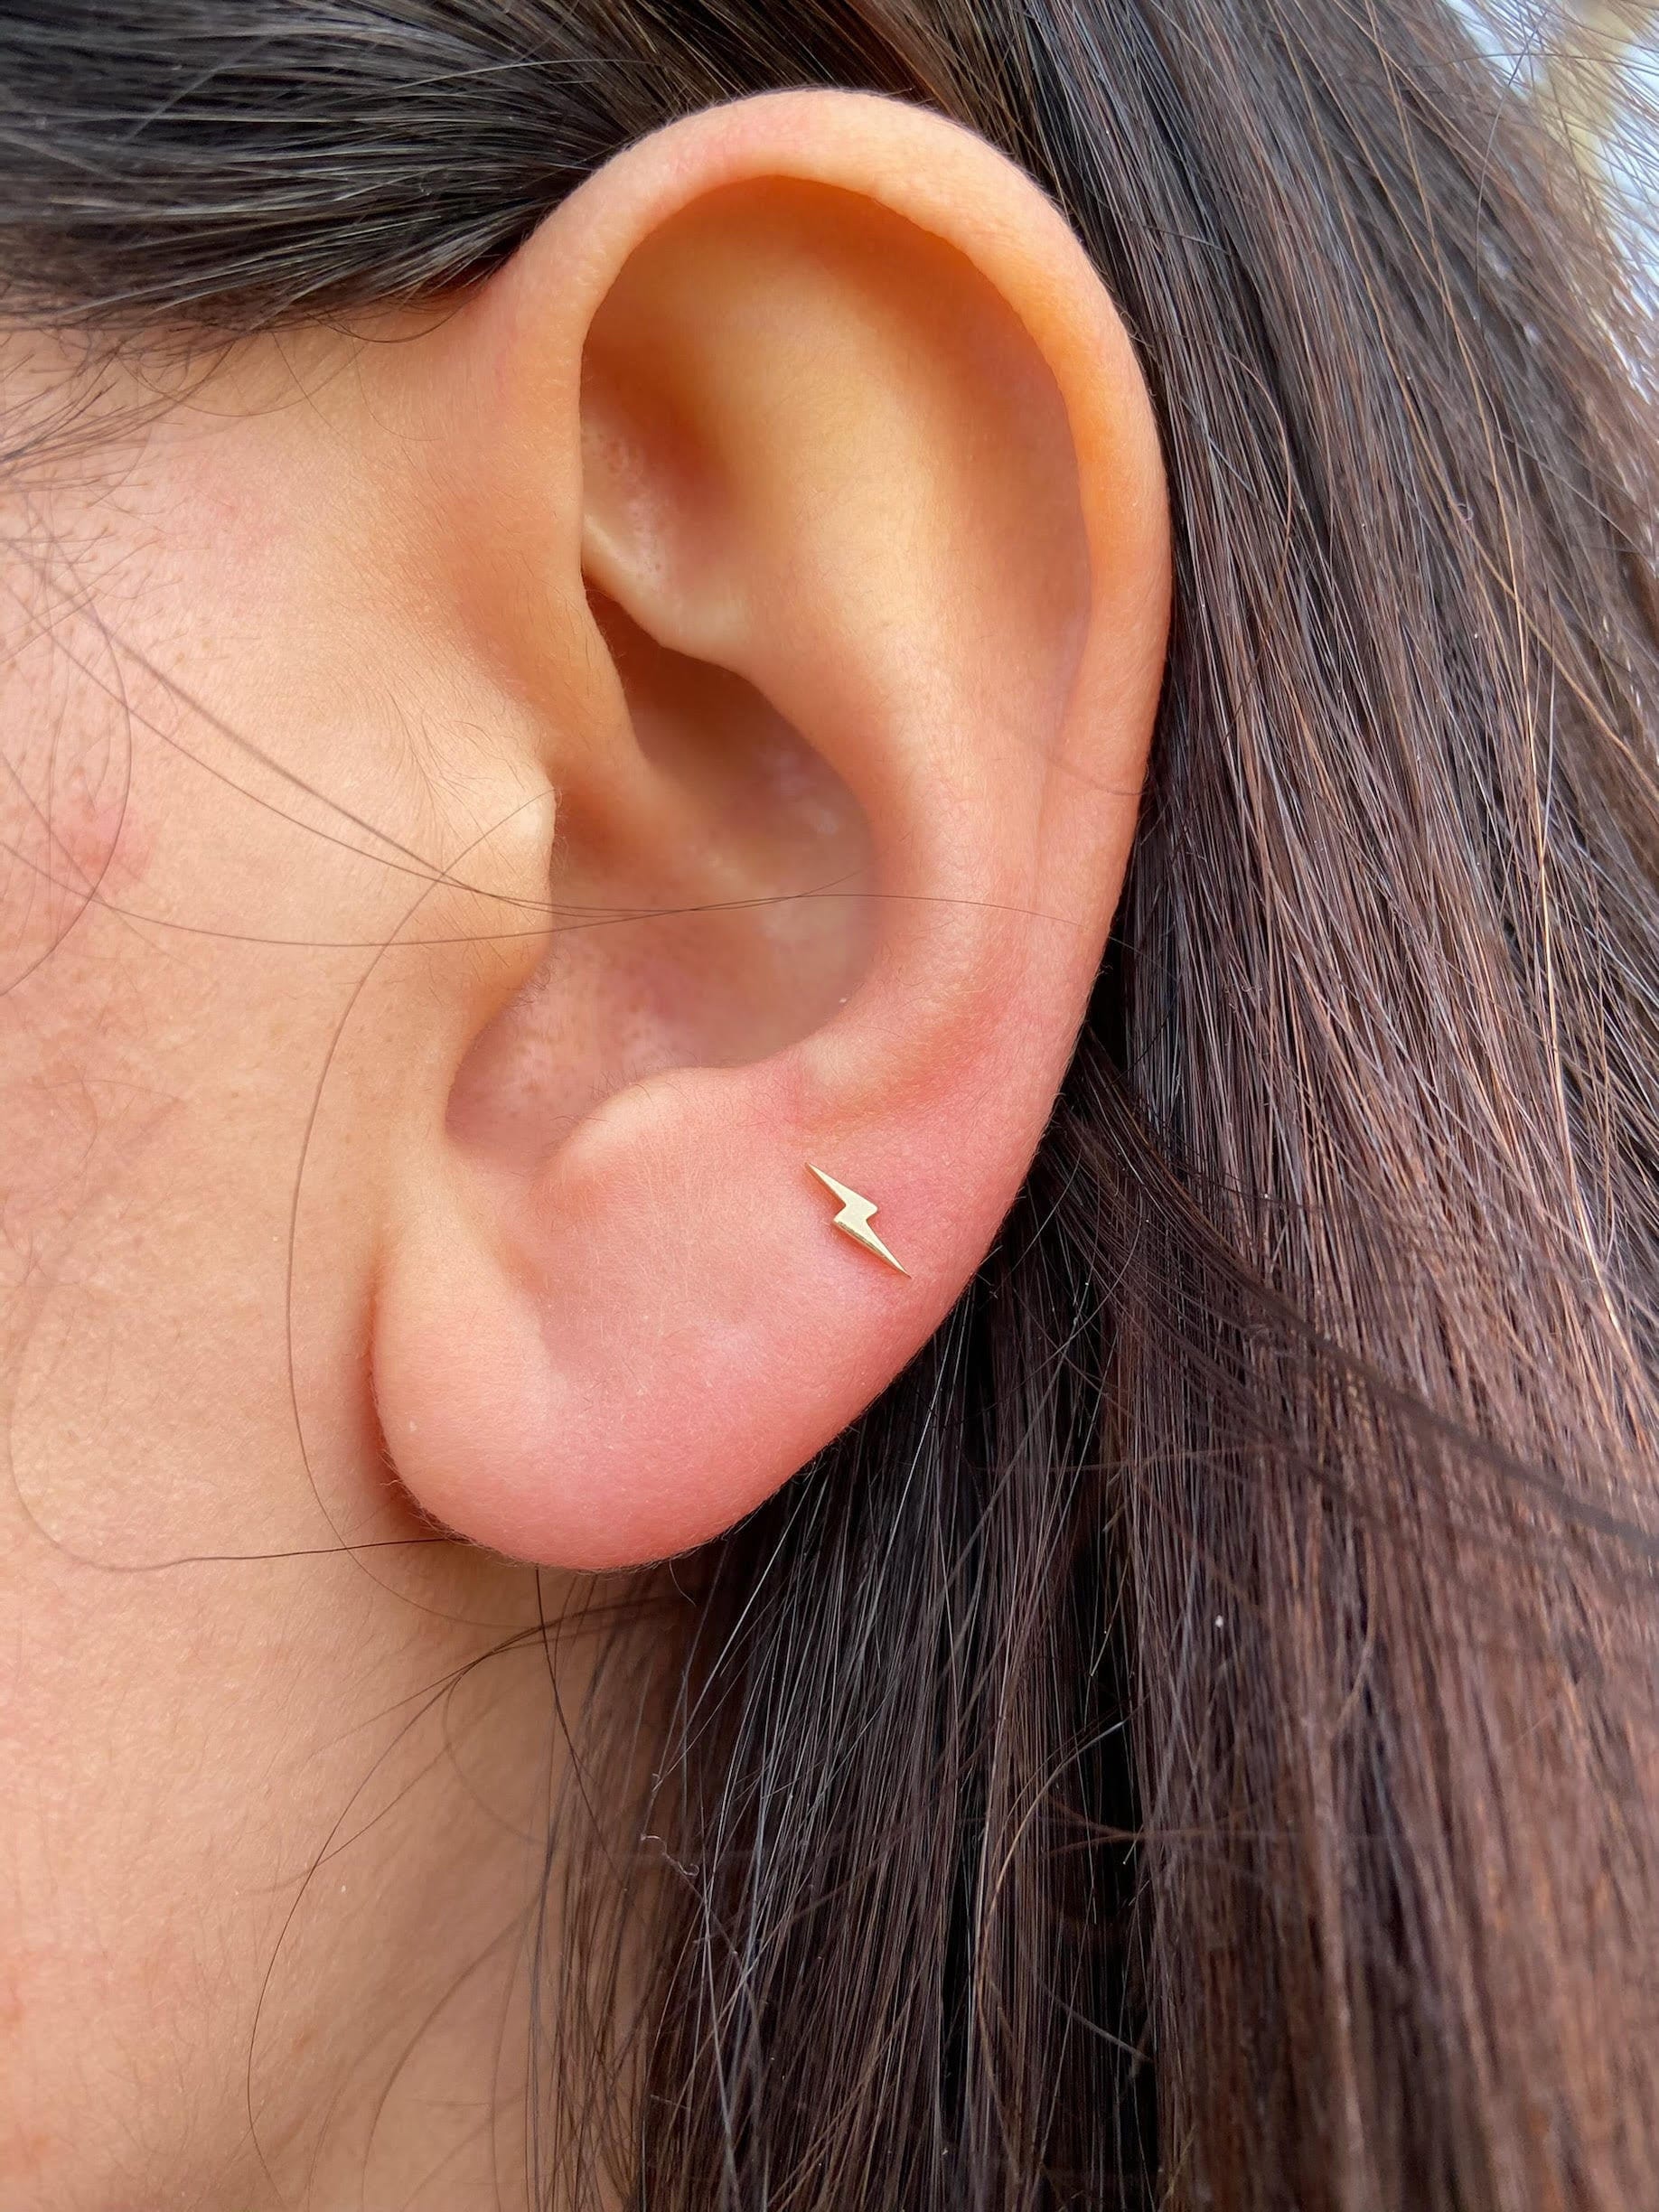 Flash Icon Minimalist Tragus Ear Piercing Stud Real 14k Solid Gold 